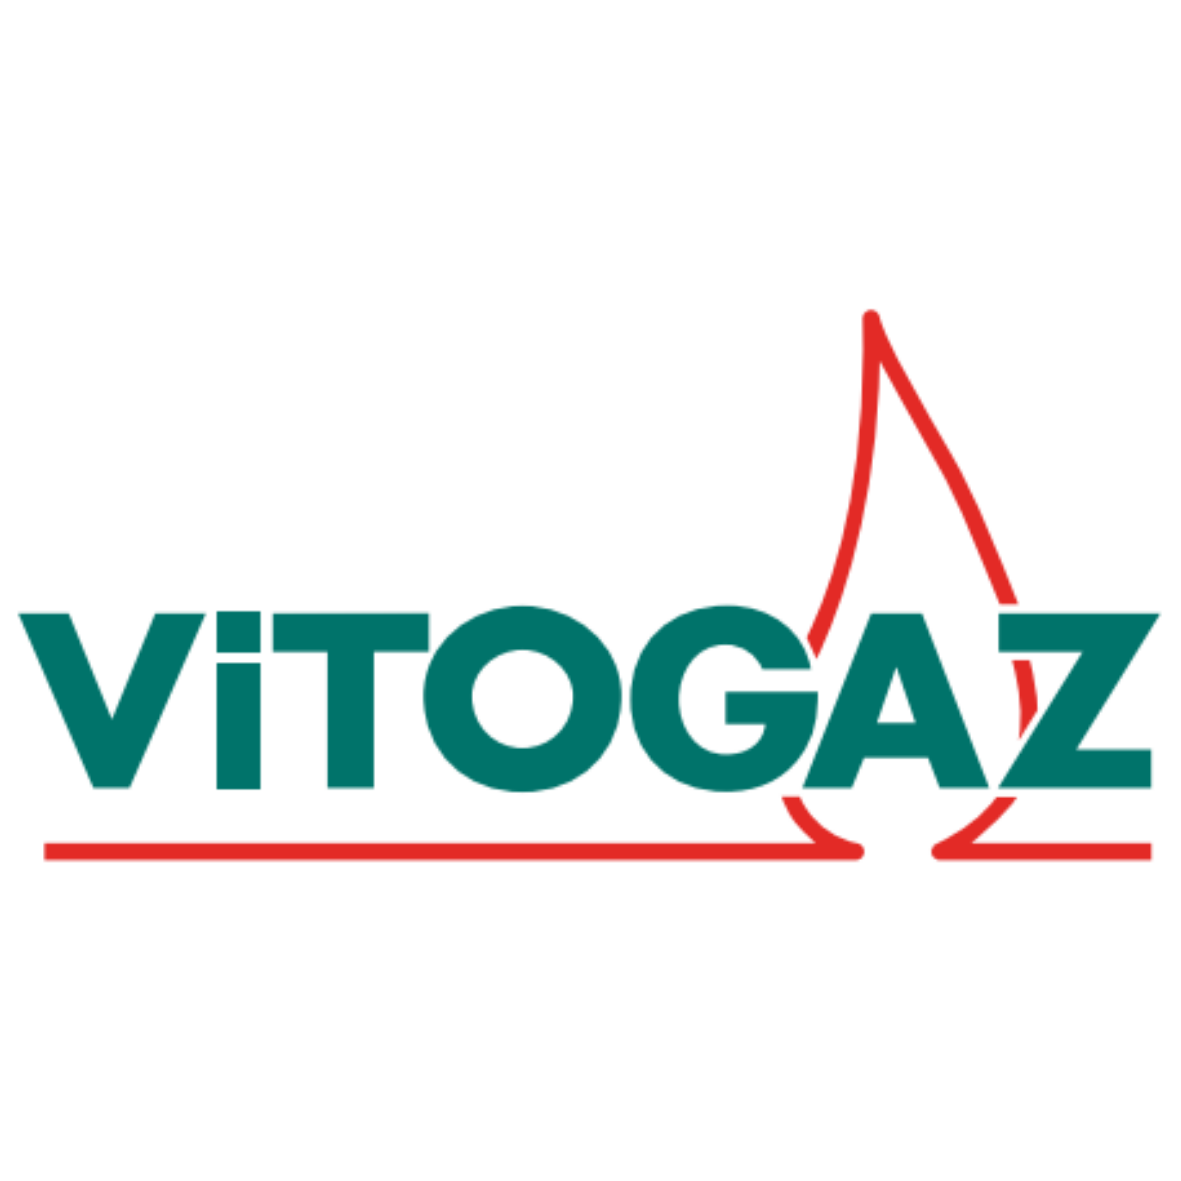 Vitogaz - Logo